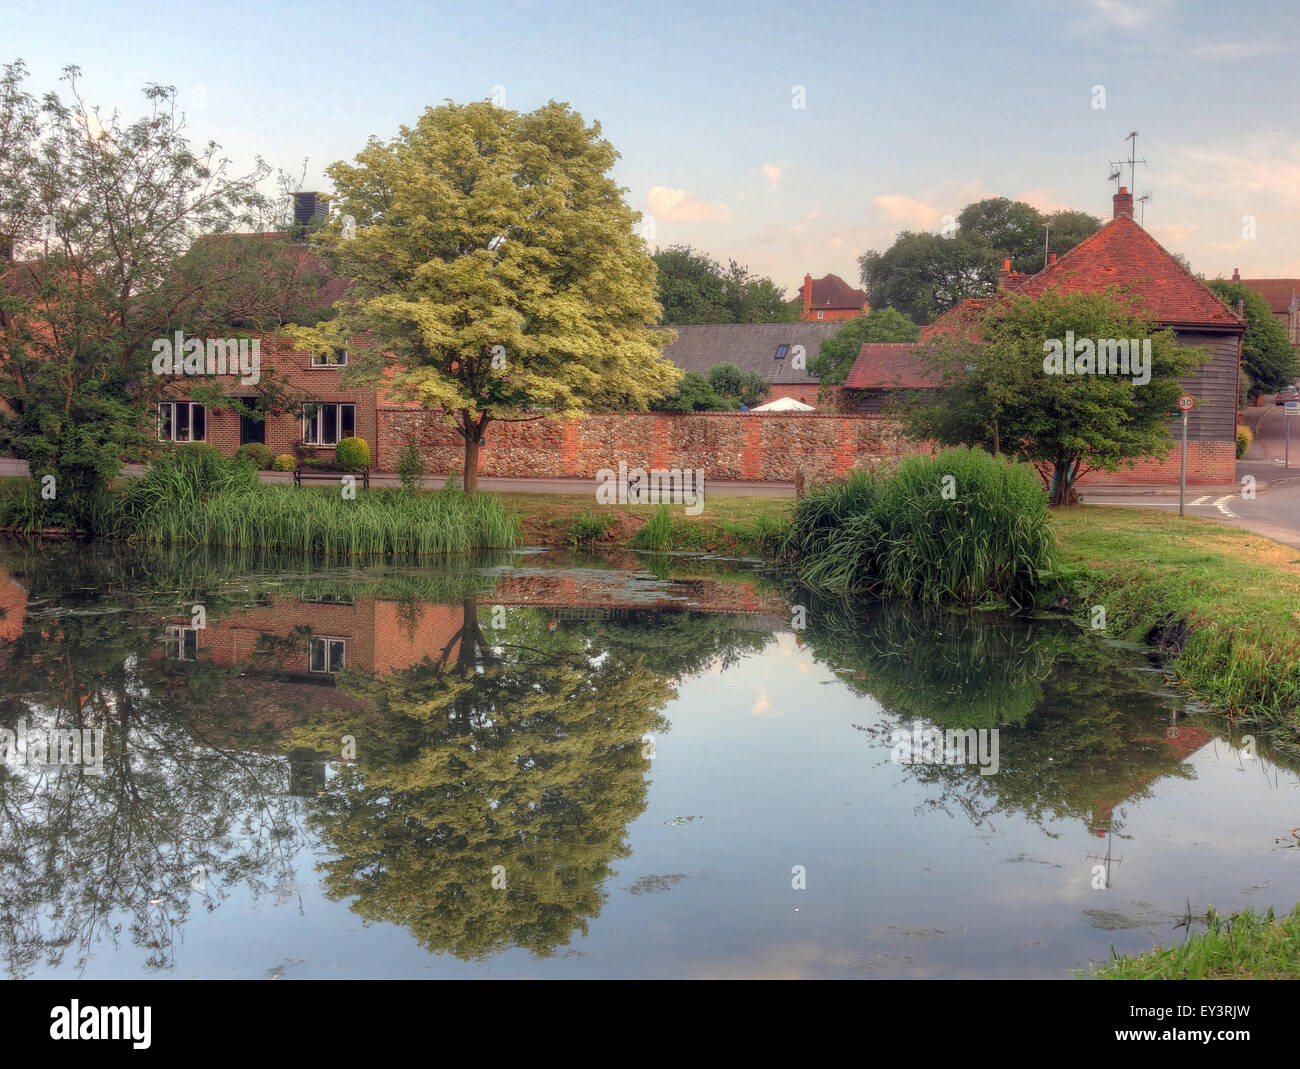 The pond, East Ilsley, Newbury, West Berkshire, England, UK, RG20 7LP Stock Photo